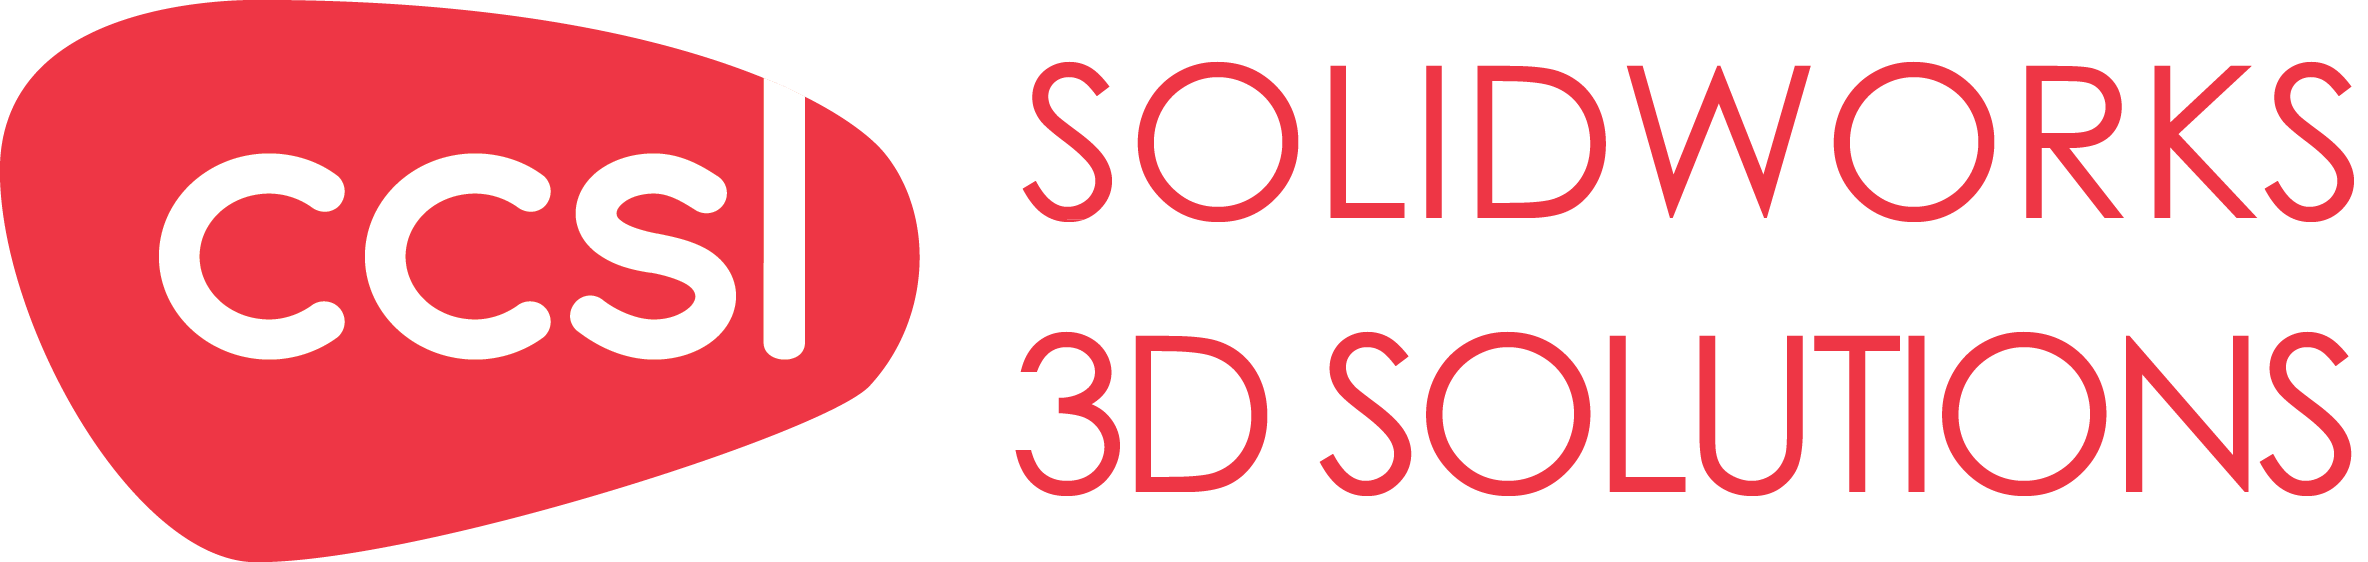 CCSL SOLIDWORKS Logo